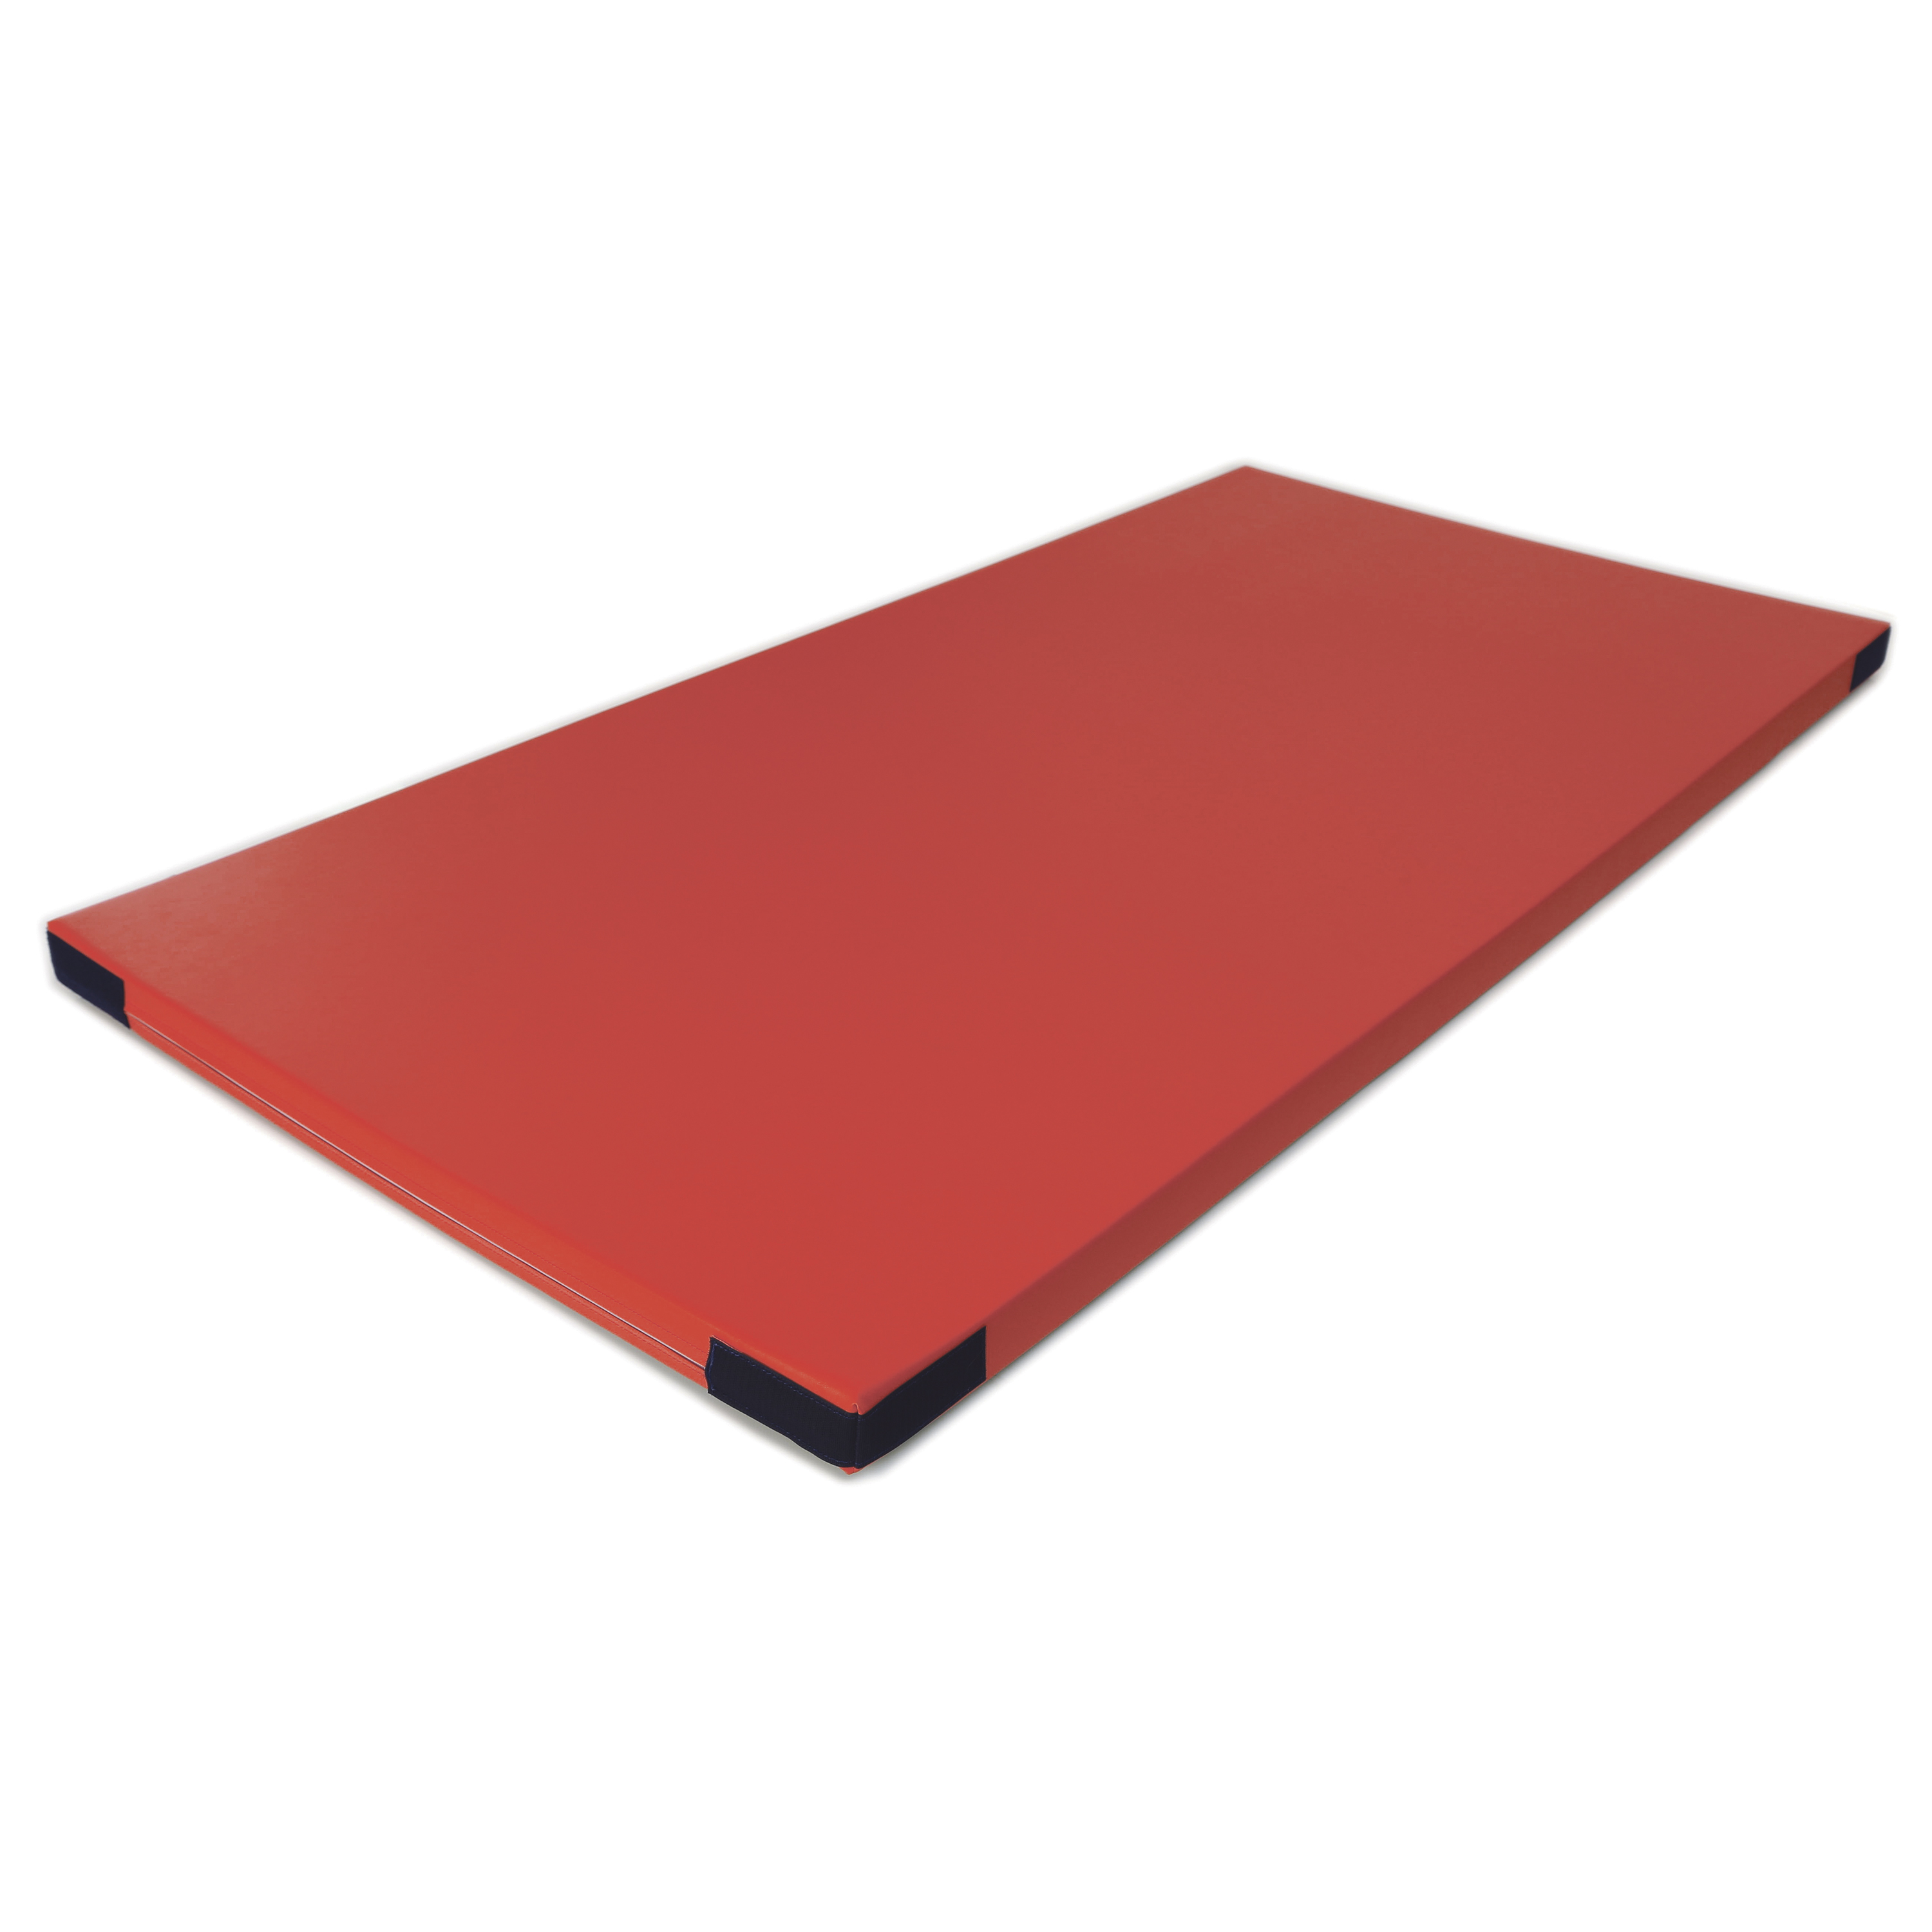 Fallschutzmatte Superleicht 'rot' Klett, 100 x 100 cm